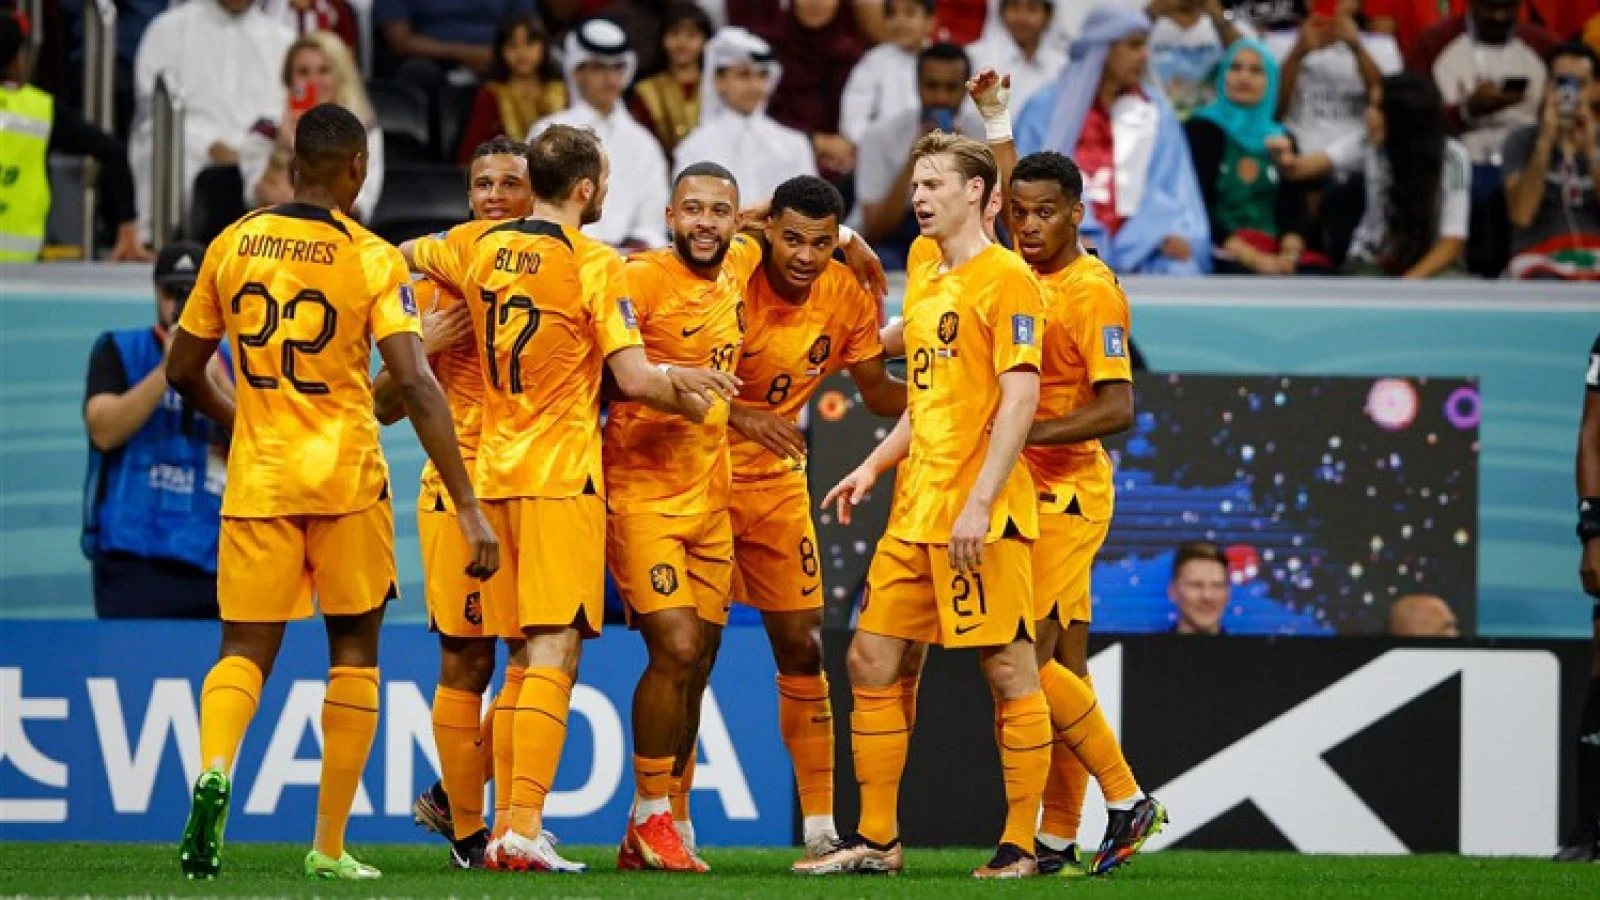 STAND | Nederland groepswinnaar op WK